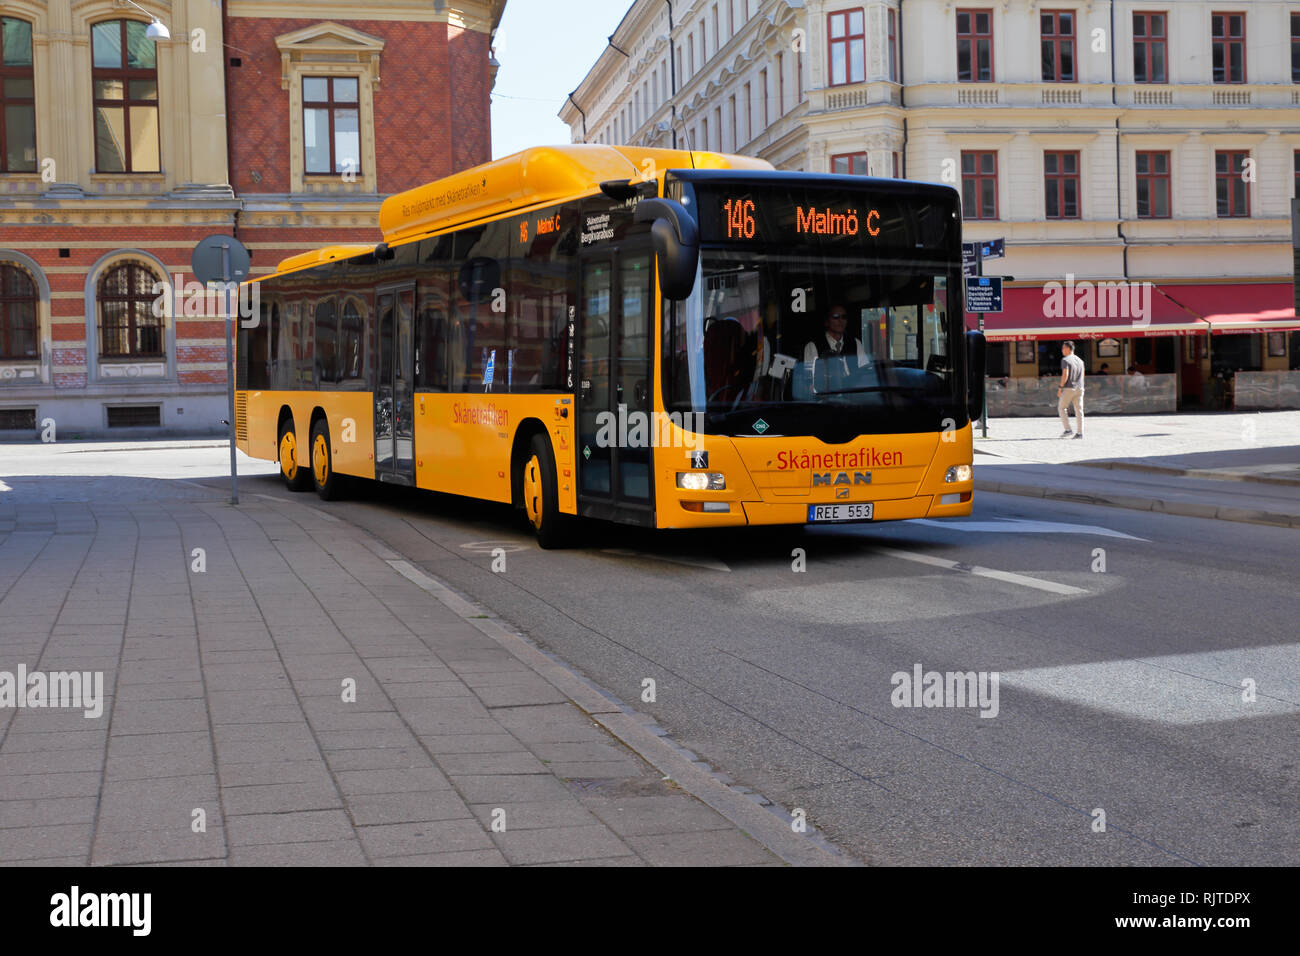 Malmo, Sweden - June 27, 2018: Yellow public transportation bus in service  for Skanetrafiken on line 146 Stock Photo - Alamy